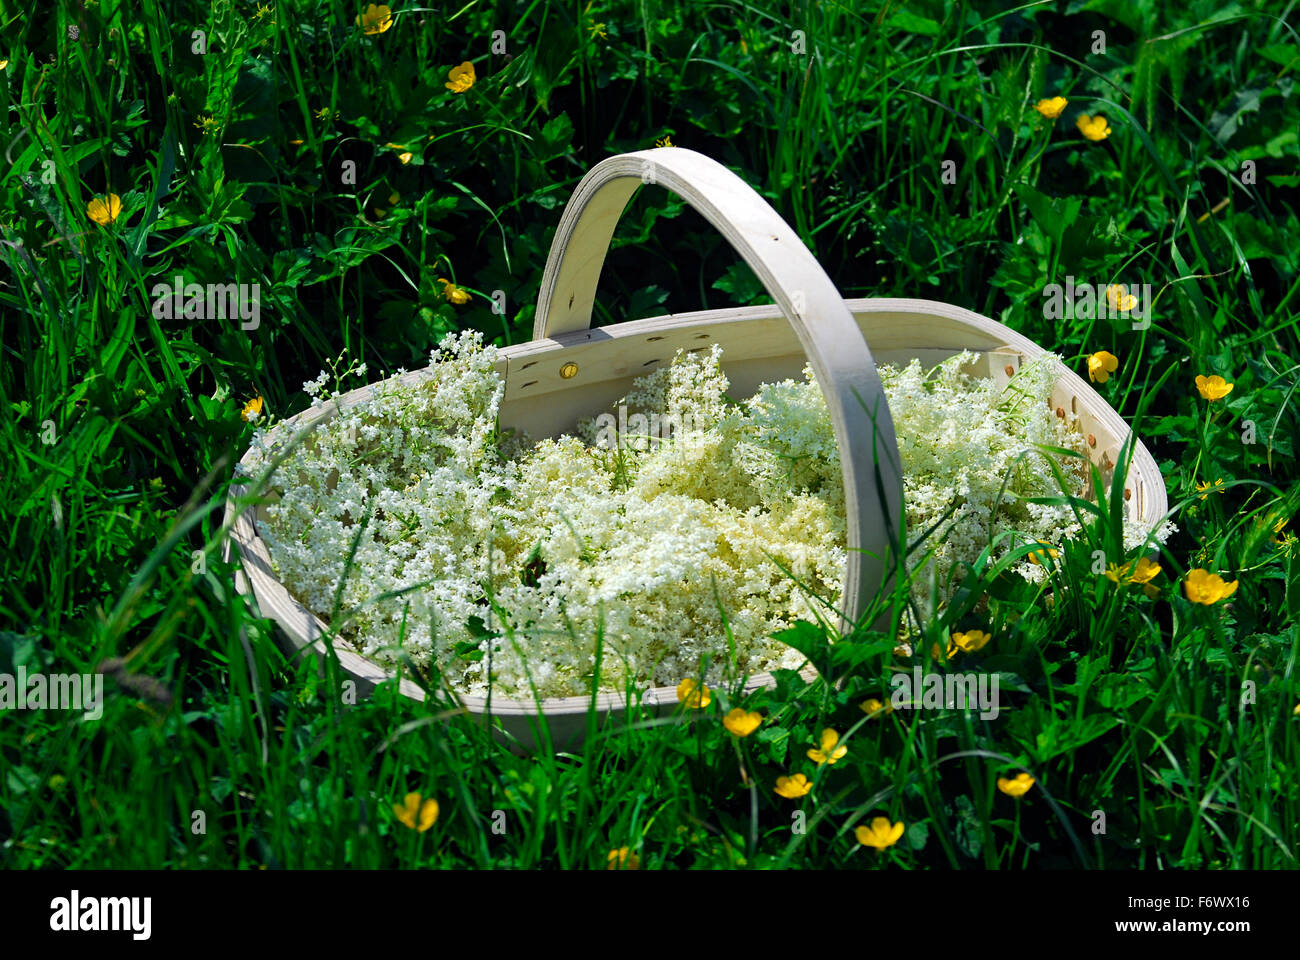 Harvest of elder flower in a wooden basket on a meadow Stock Photo